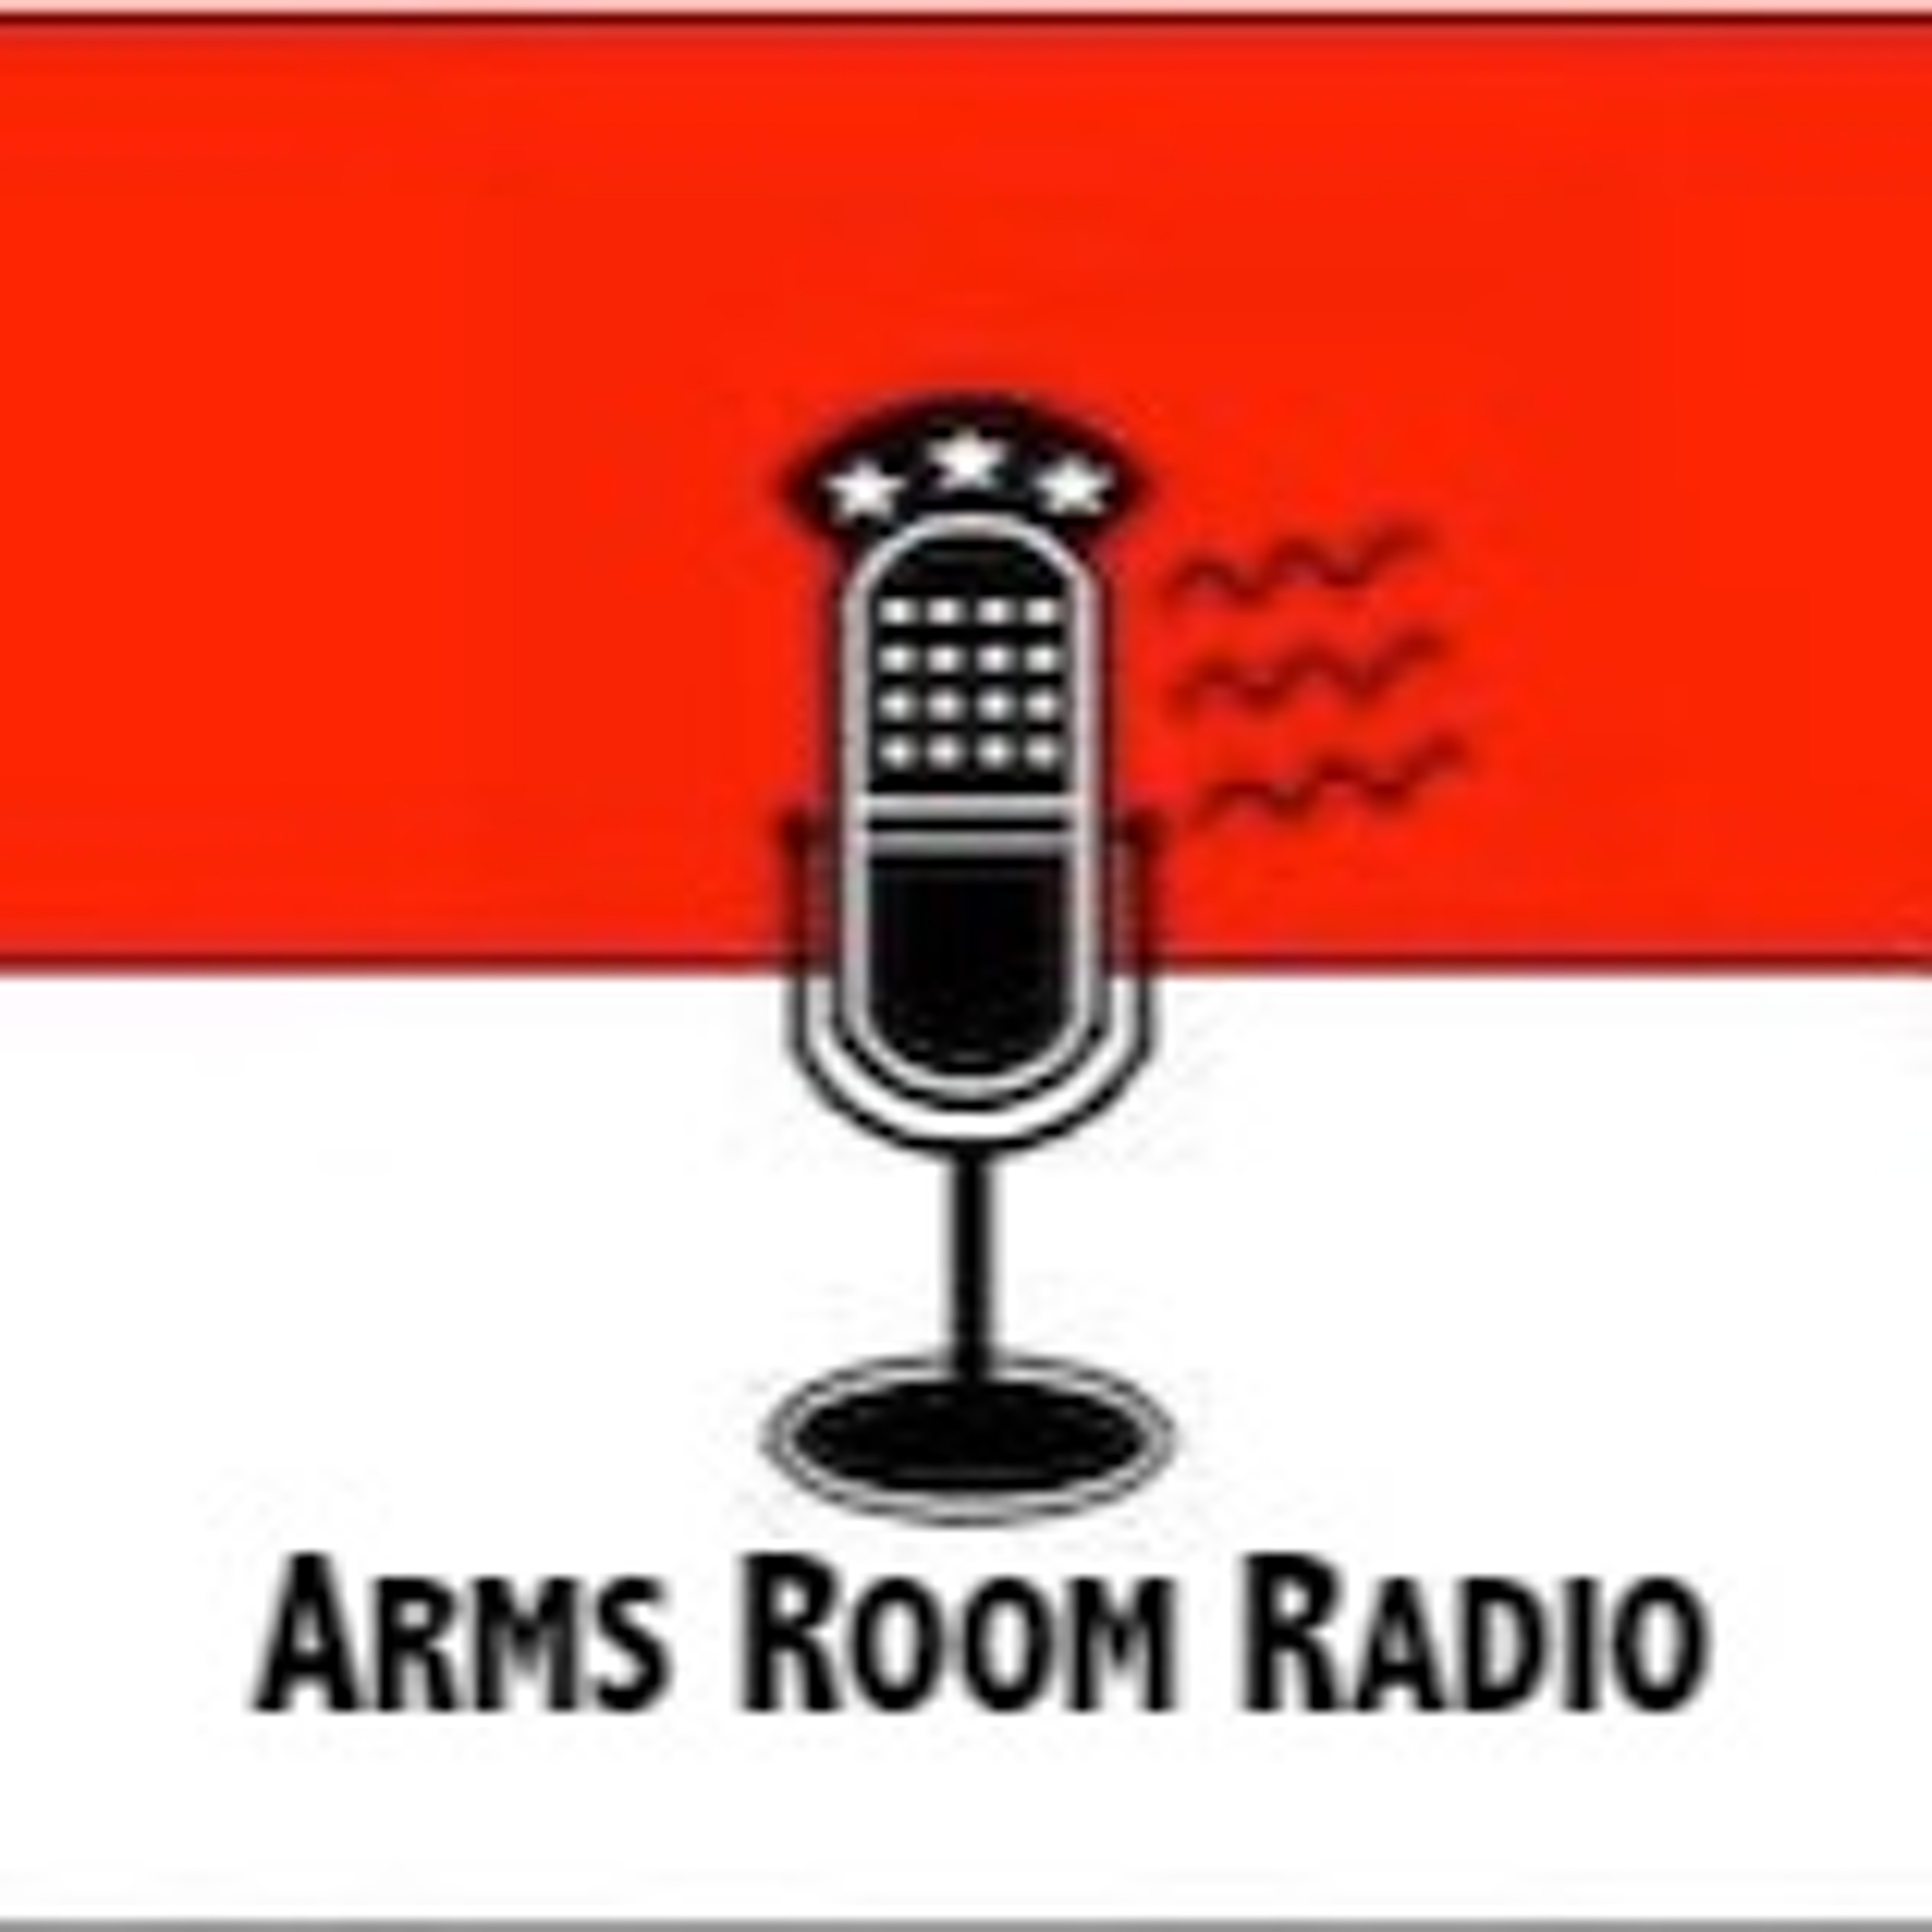 ArmsRoomRadio 05.11.19 Back in Studio